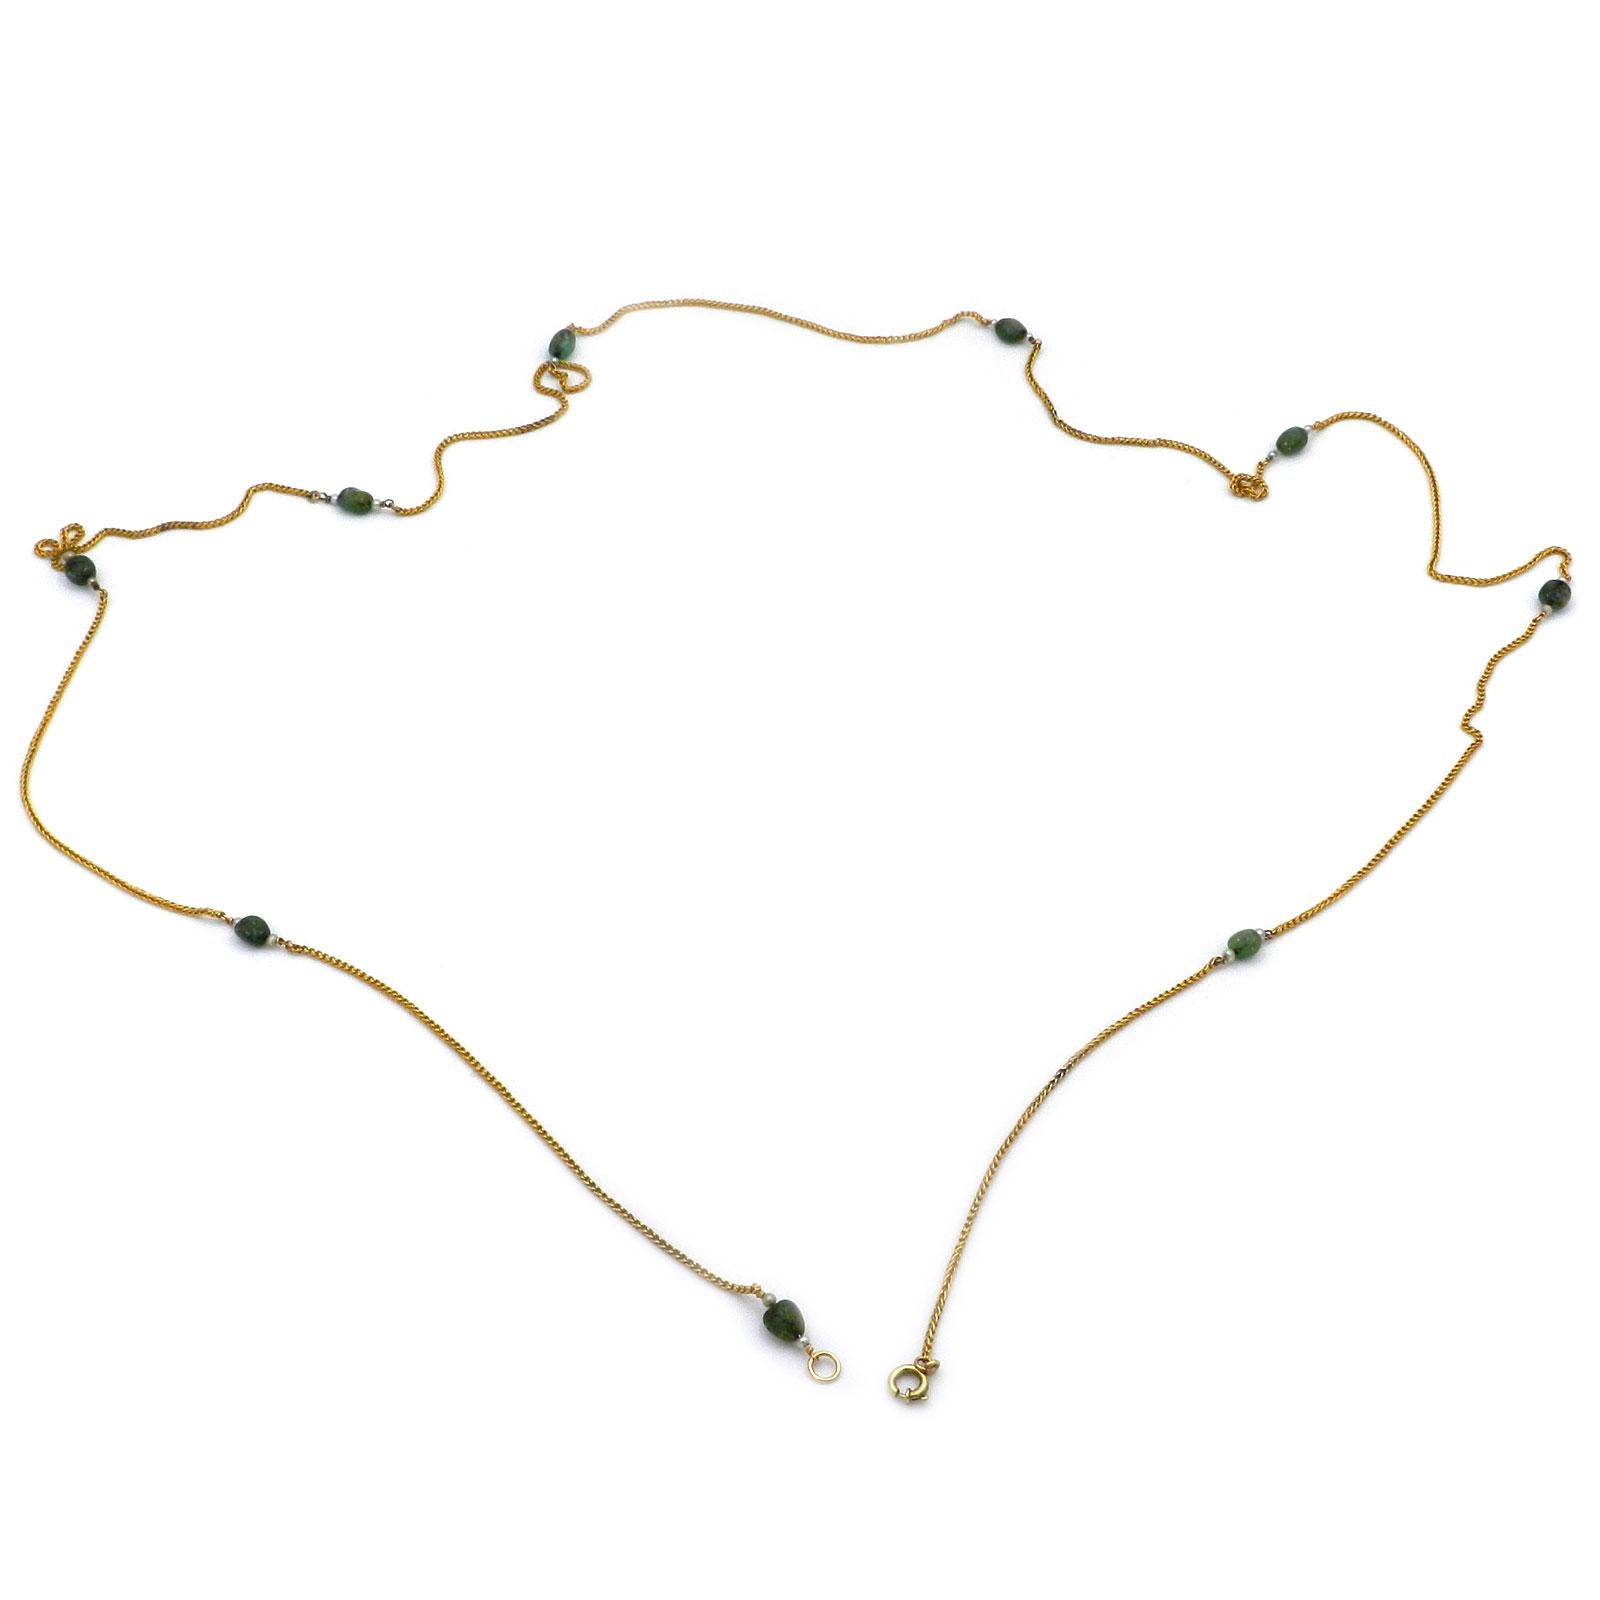 Uncut Art Nouveau 18K Gold Emerald and Oriental Pearl Chain Necklace, circa 1910